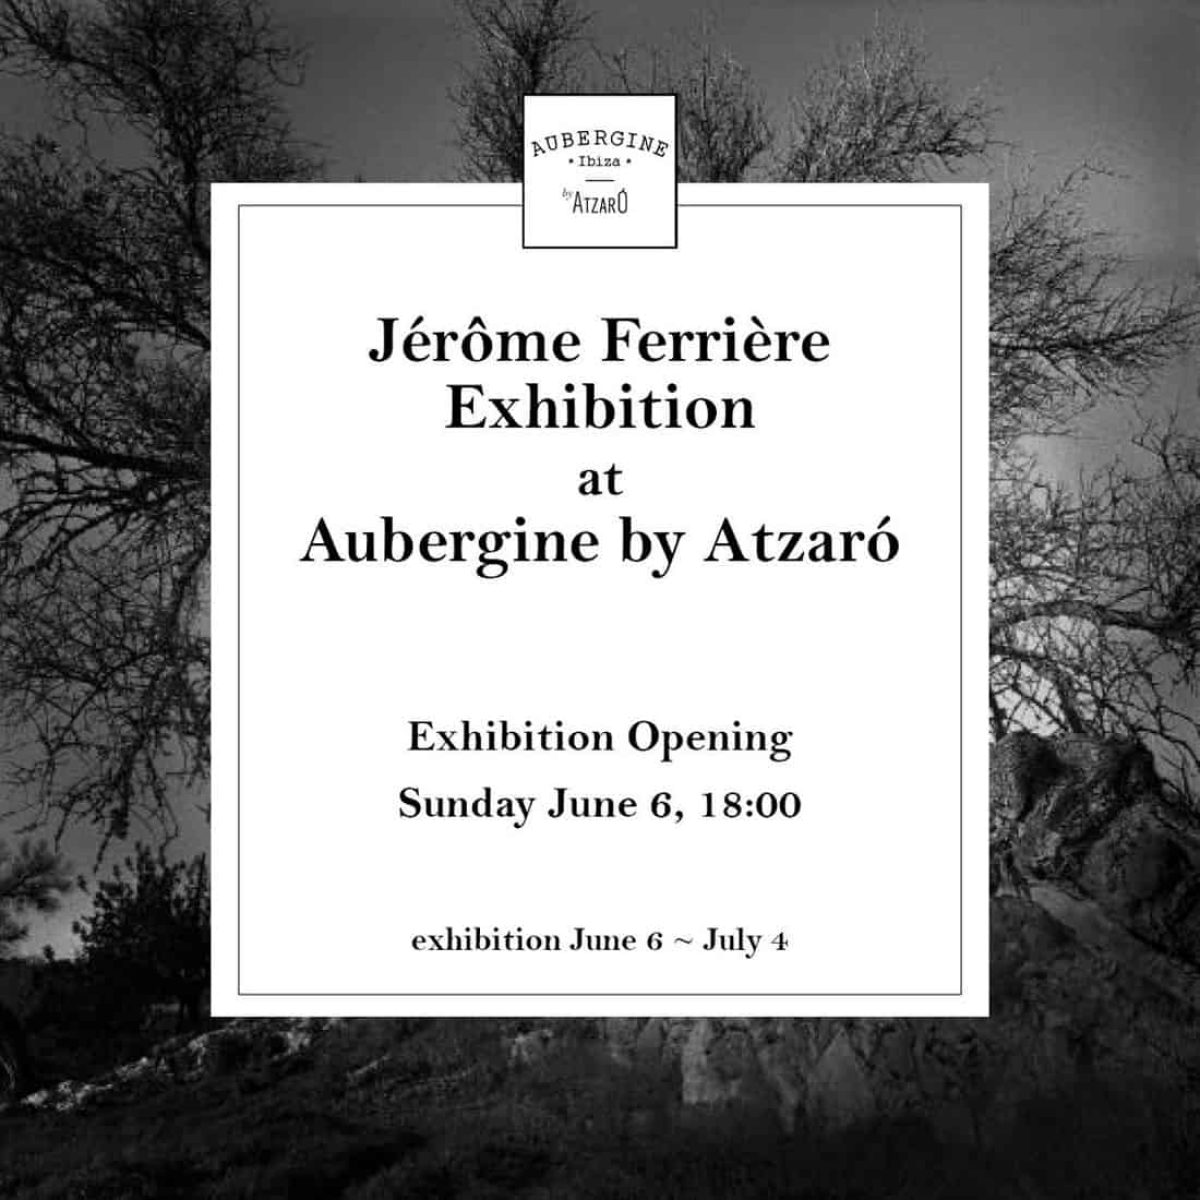 ausstellung-jerome-ferriere-restaurant-aubergine-ibiza-2021-welcometoibiza